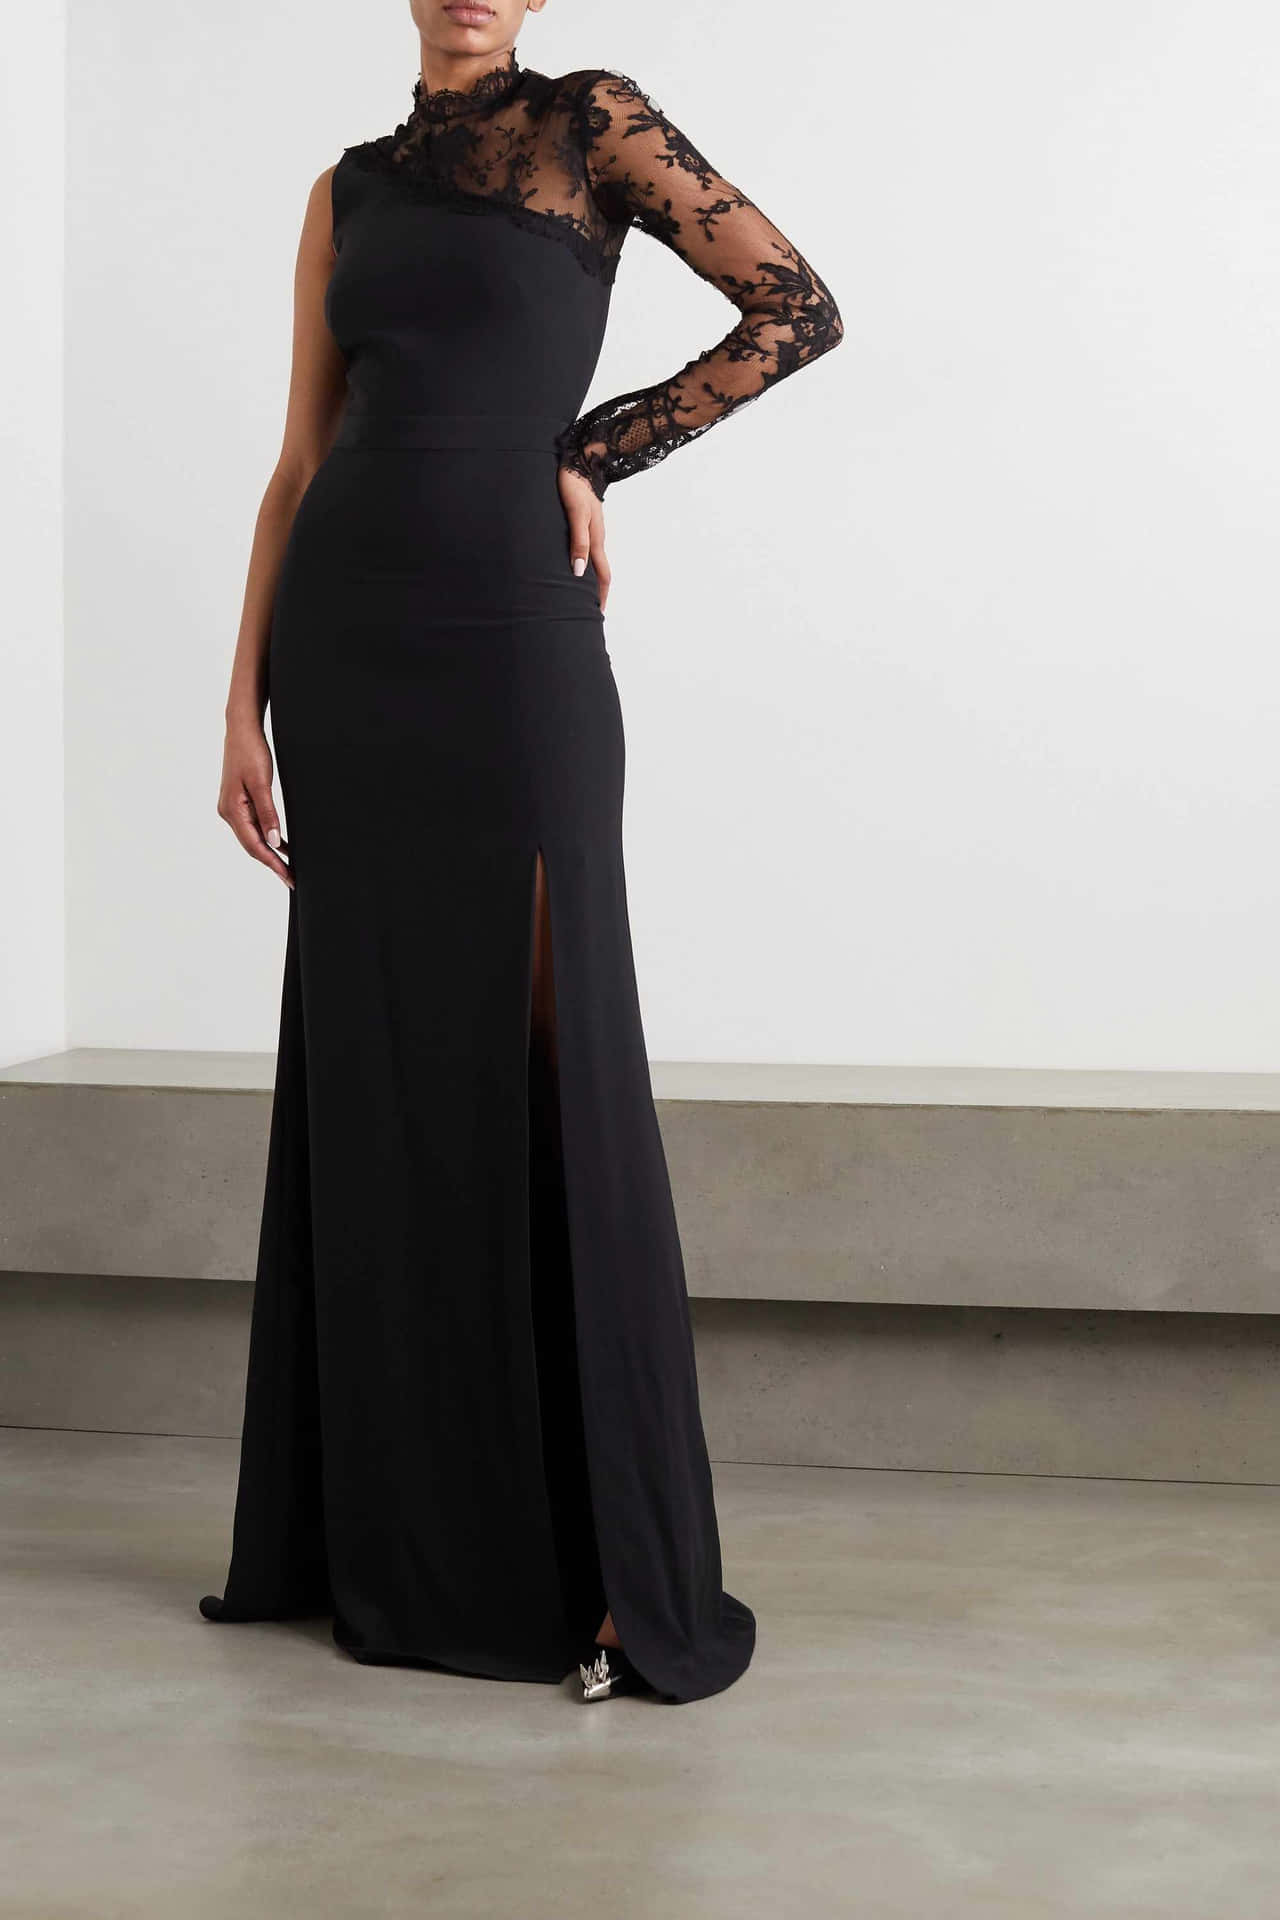 Look dazzling and elegant in this black tie dress Wallpaper